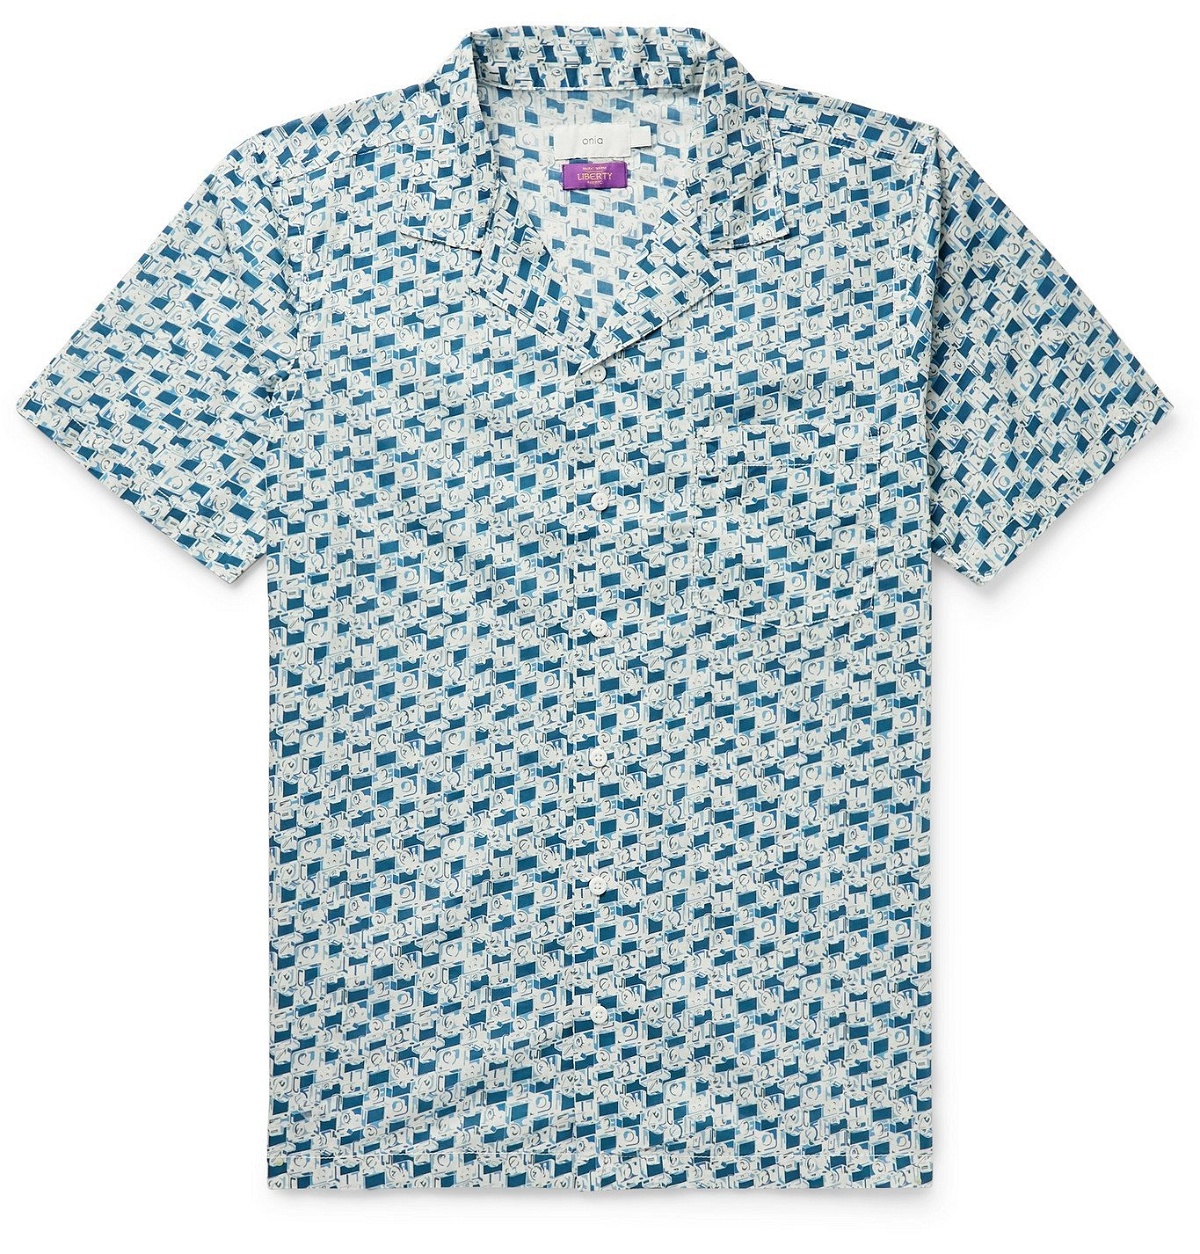 Onia - Liberty London Vacation Camp-Collar Printed Cotton Shirt - Blue Onia